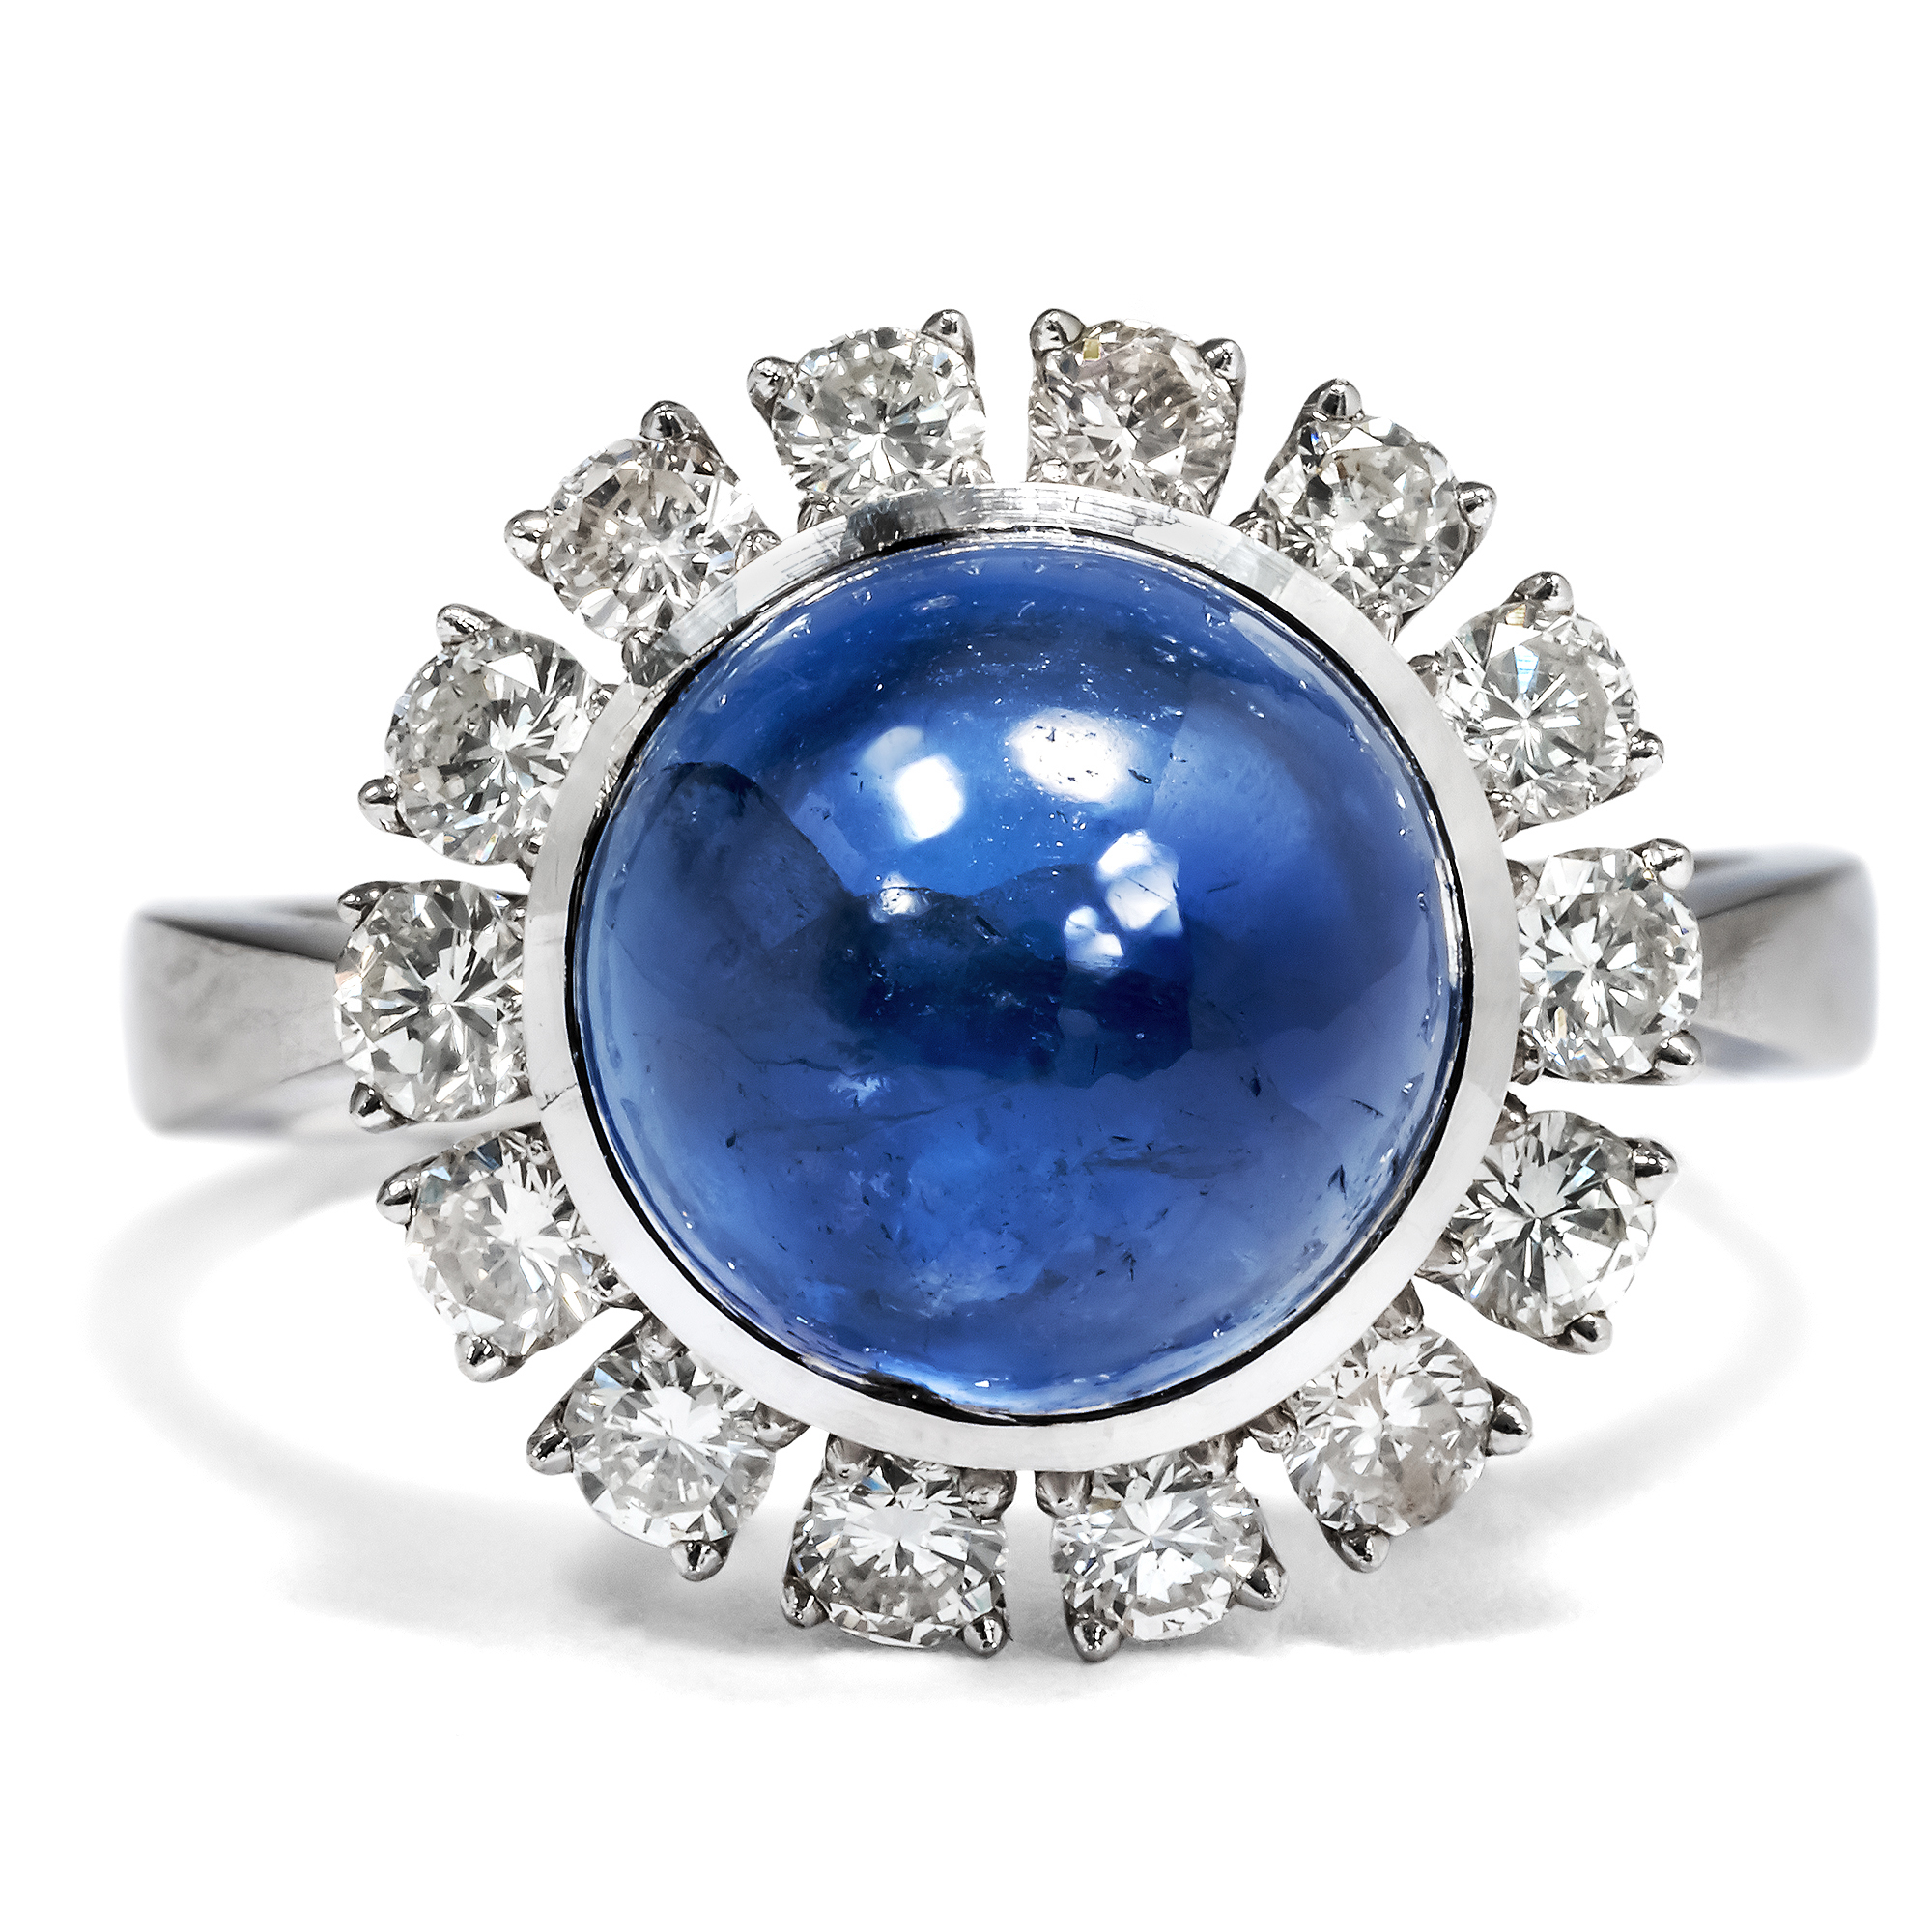 Sparkling Vintage White Gold Ring With Sapphire & Diamonds, Circa 1970